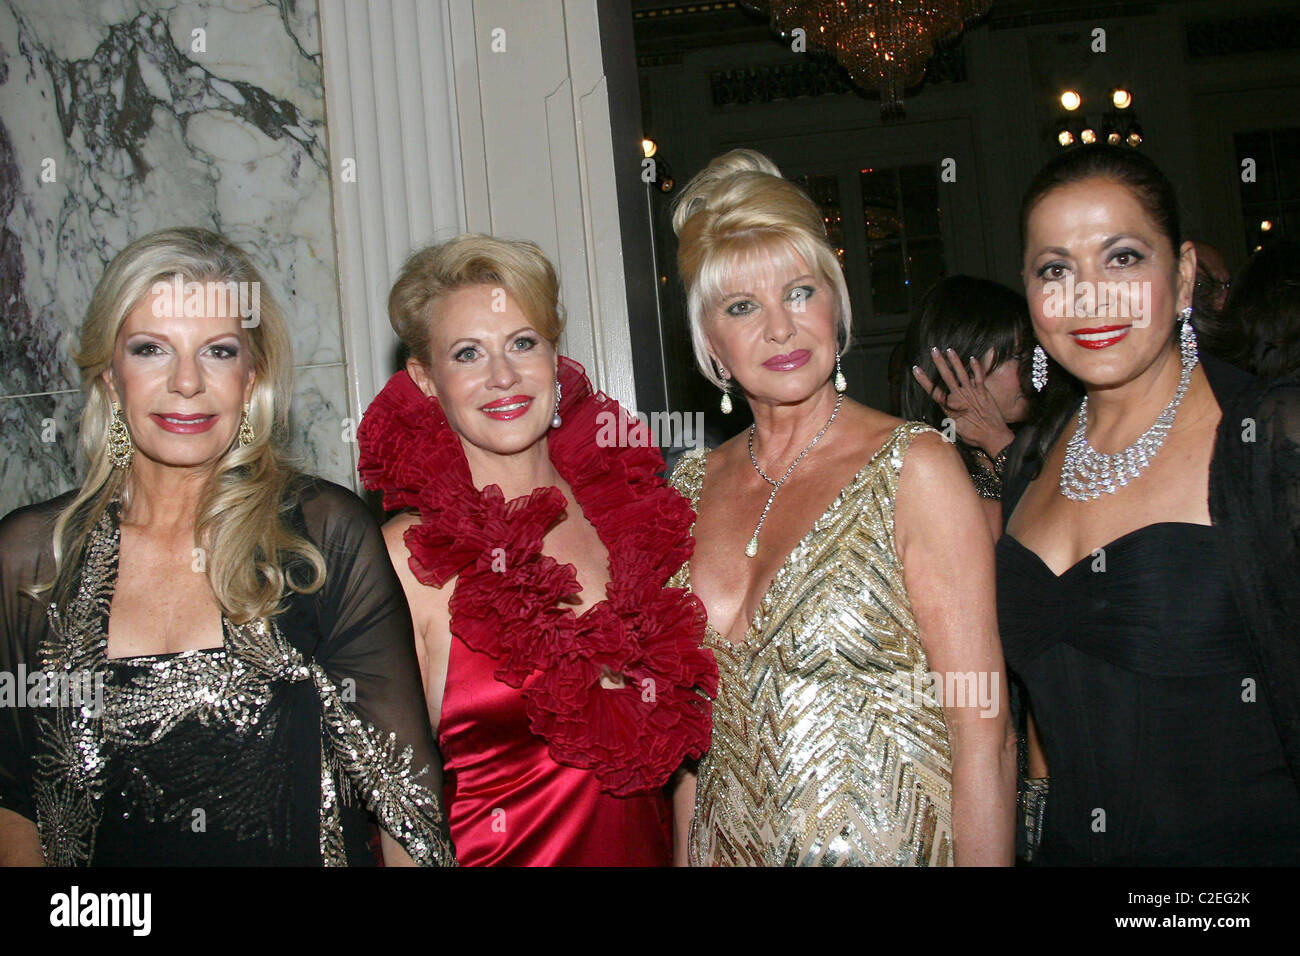 Princess Yasmin Aga Khan, Ivana Trump, and guest Bewitch, Bothered & Bewildered - 2007 Alzheimer's Association Rita Hayworth Stock Photo